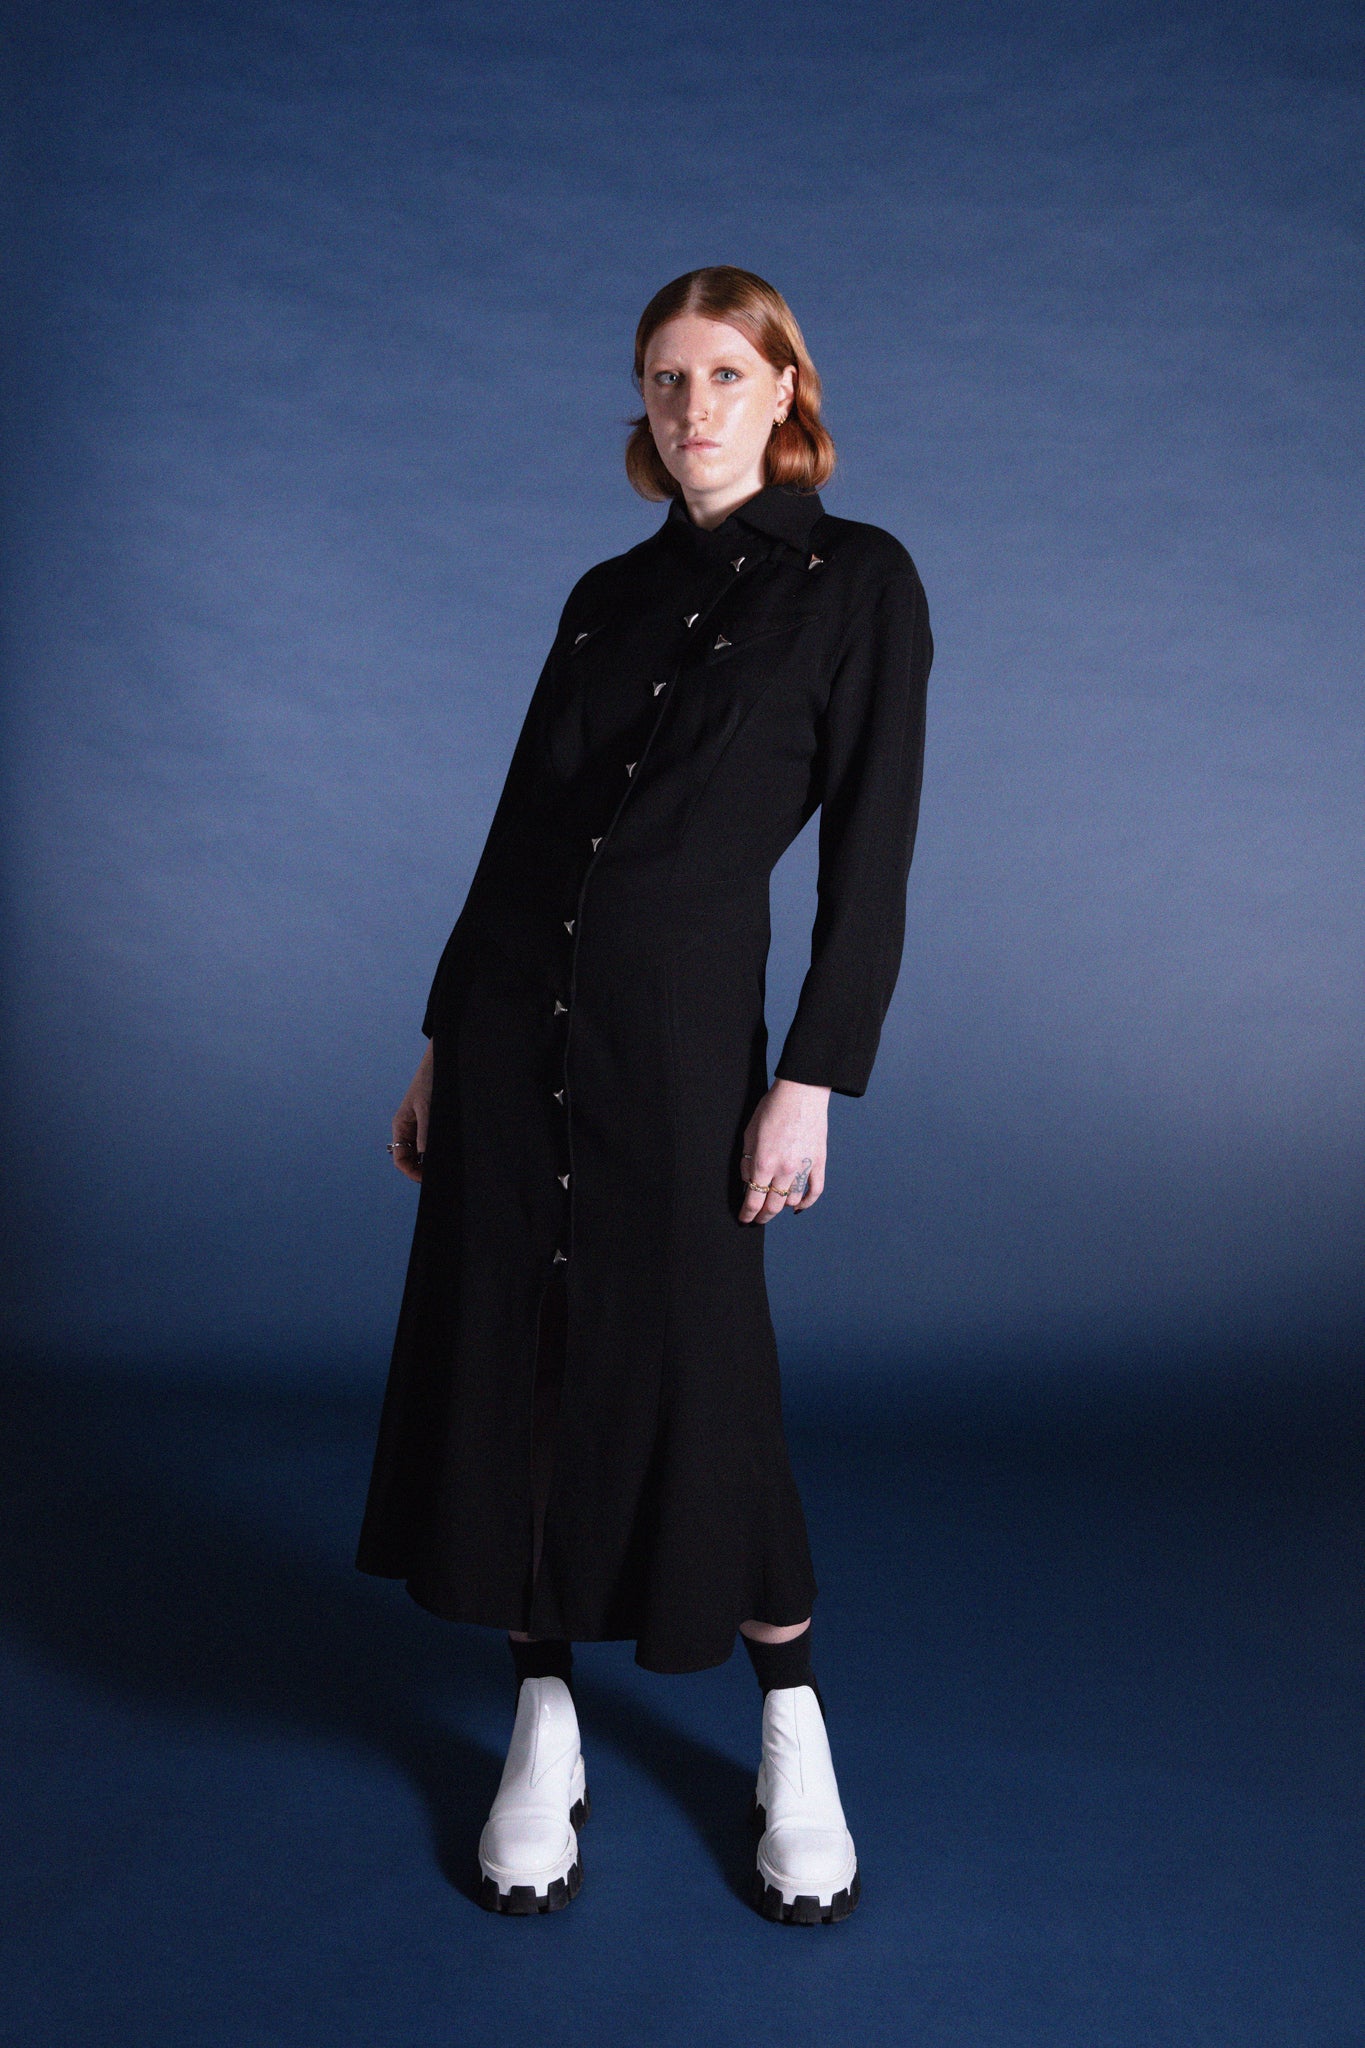 thierry mugler activ long dress jacket prada monolith white boot redhead fashion studio photography vintage